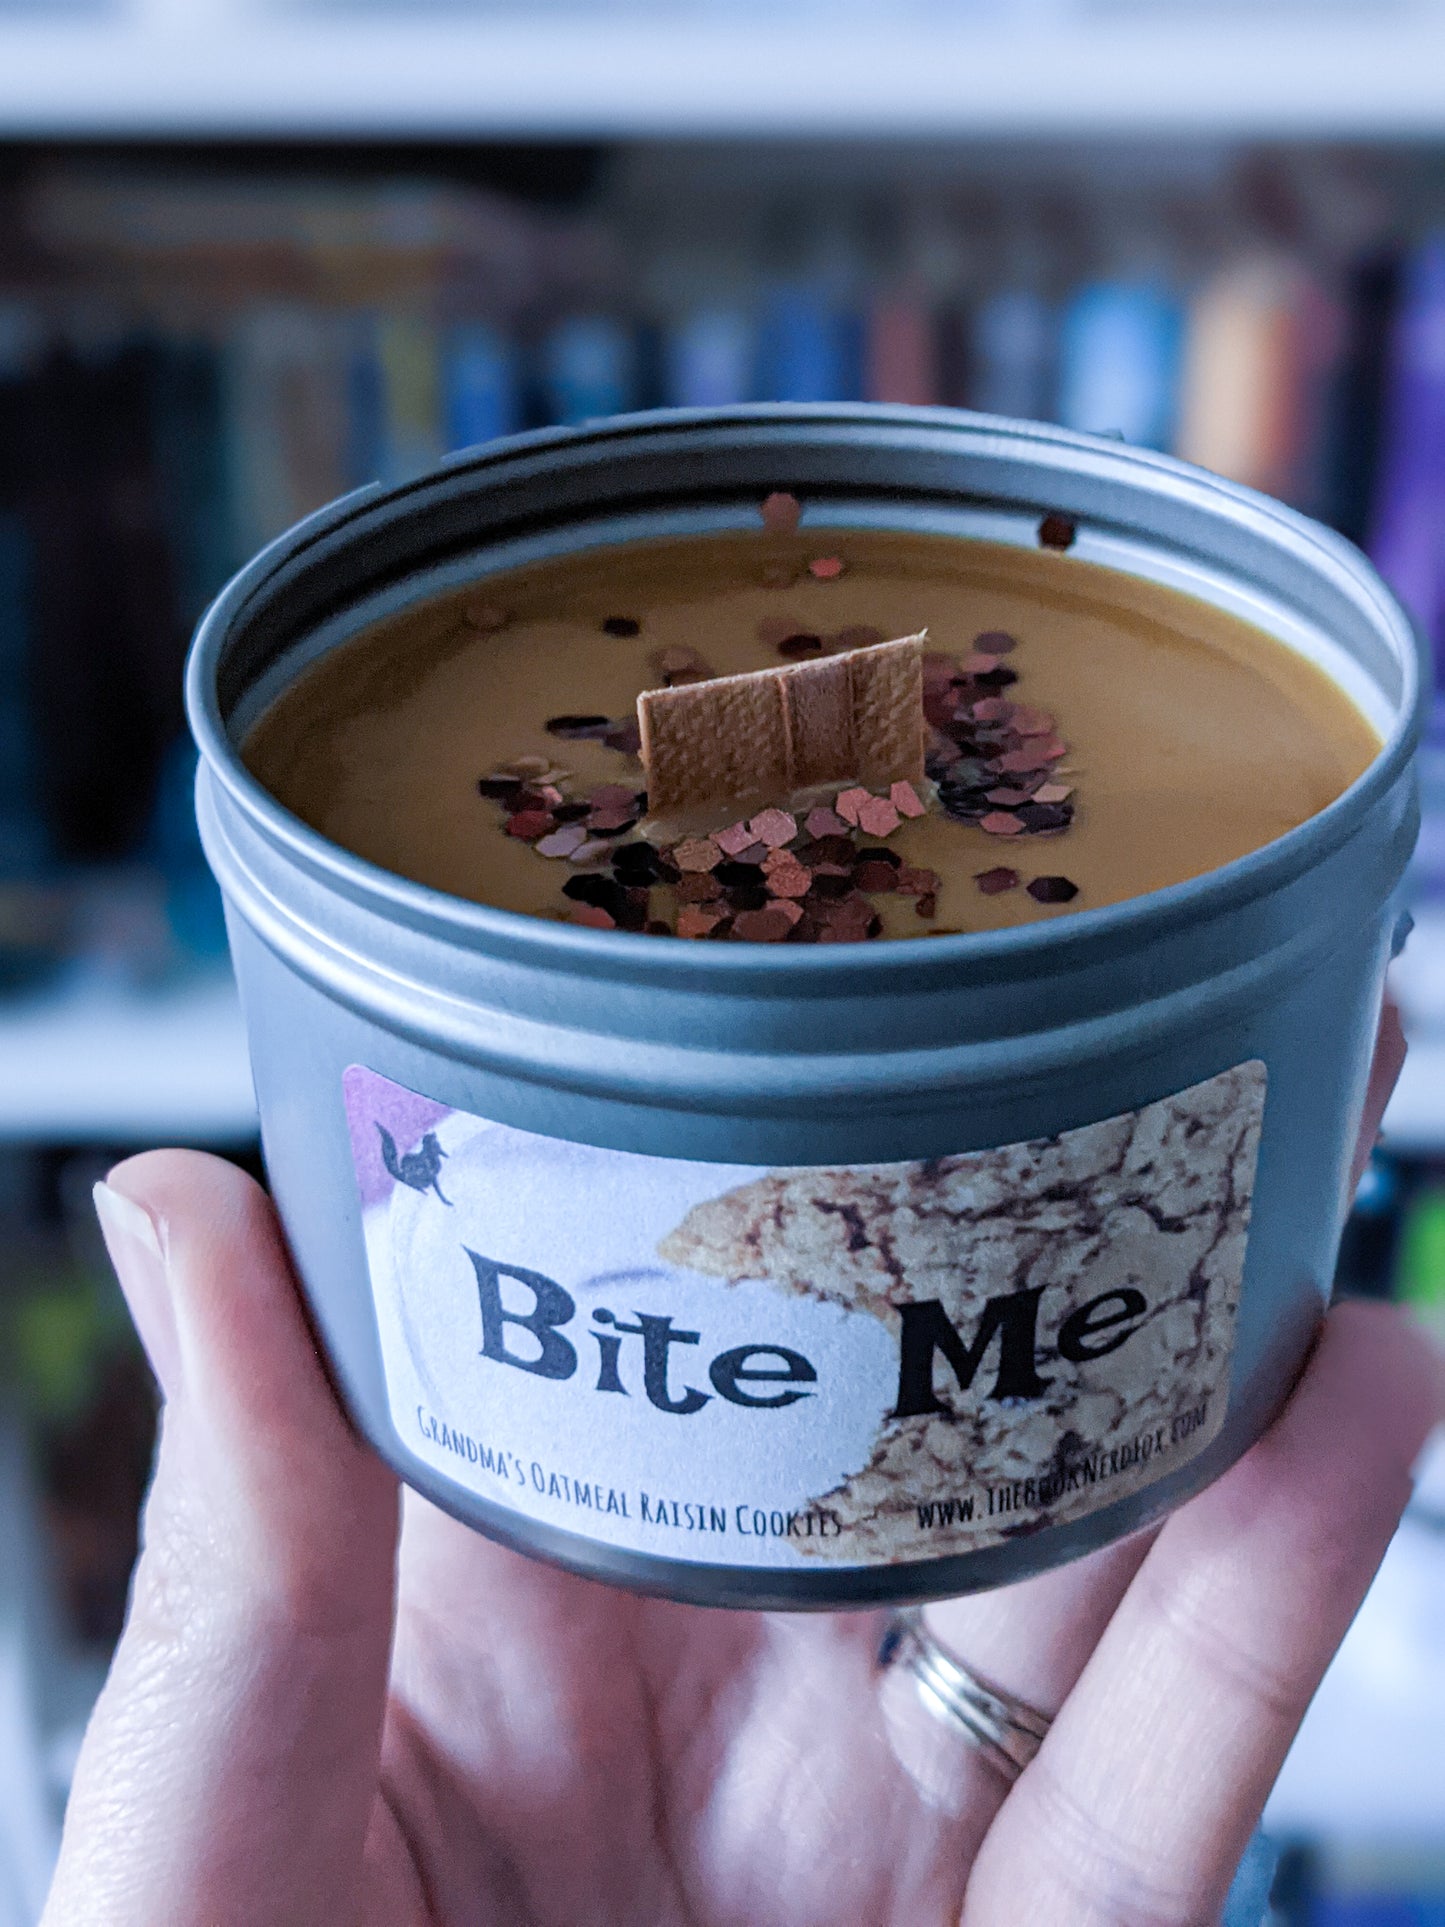 Bite Me - Oatmeal Cookie